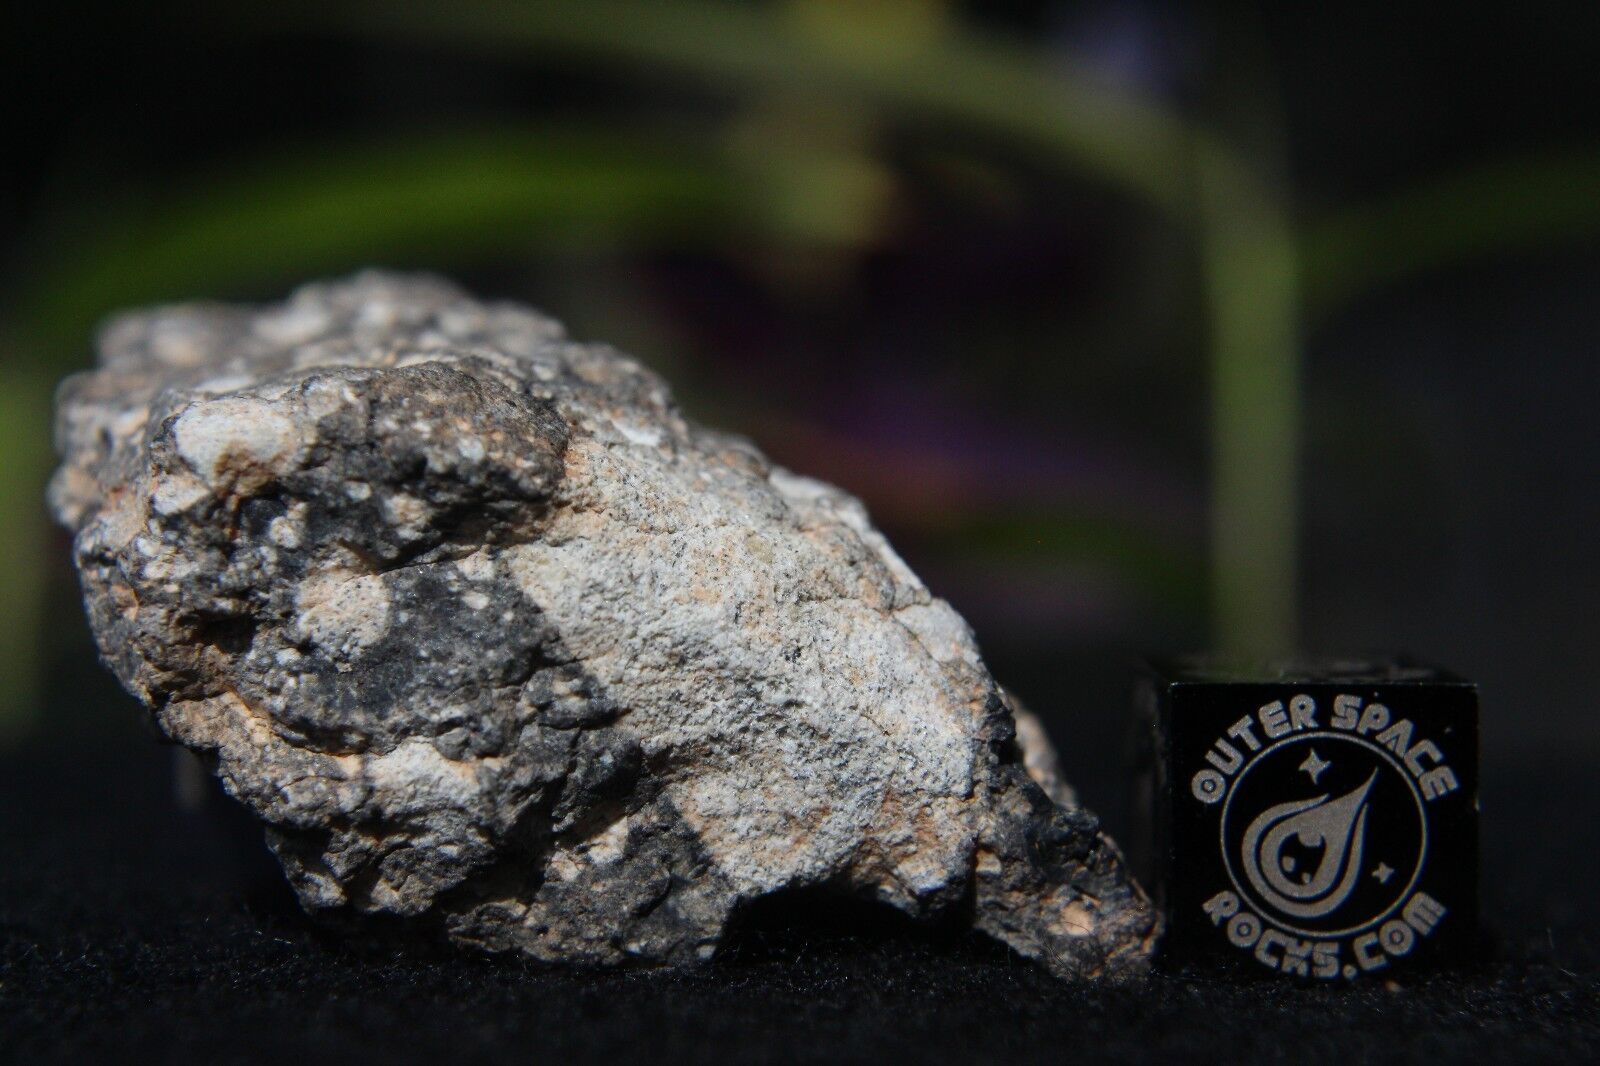 NWA 11266 Official Lunar Feldspathic Regolith Breccia Meteorite 20.5 gram frag